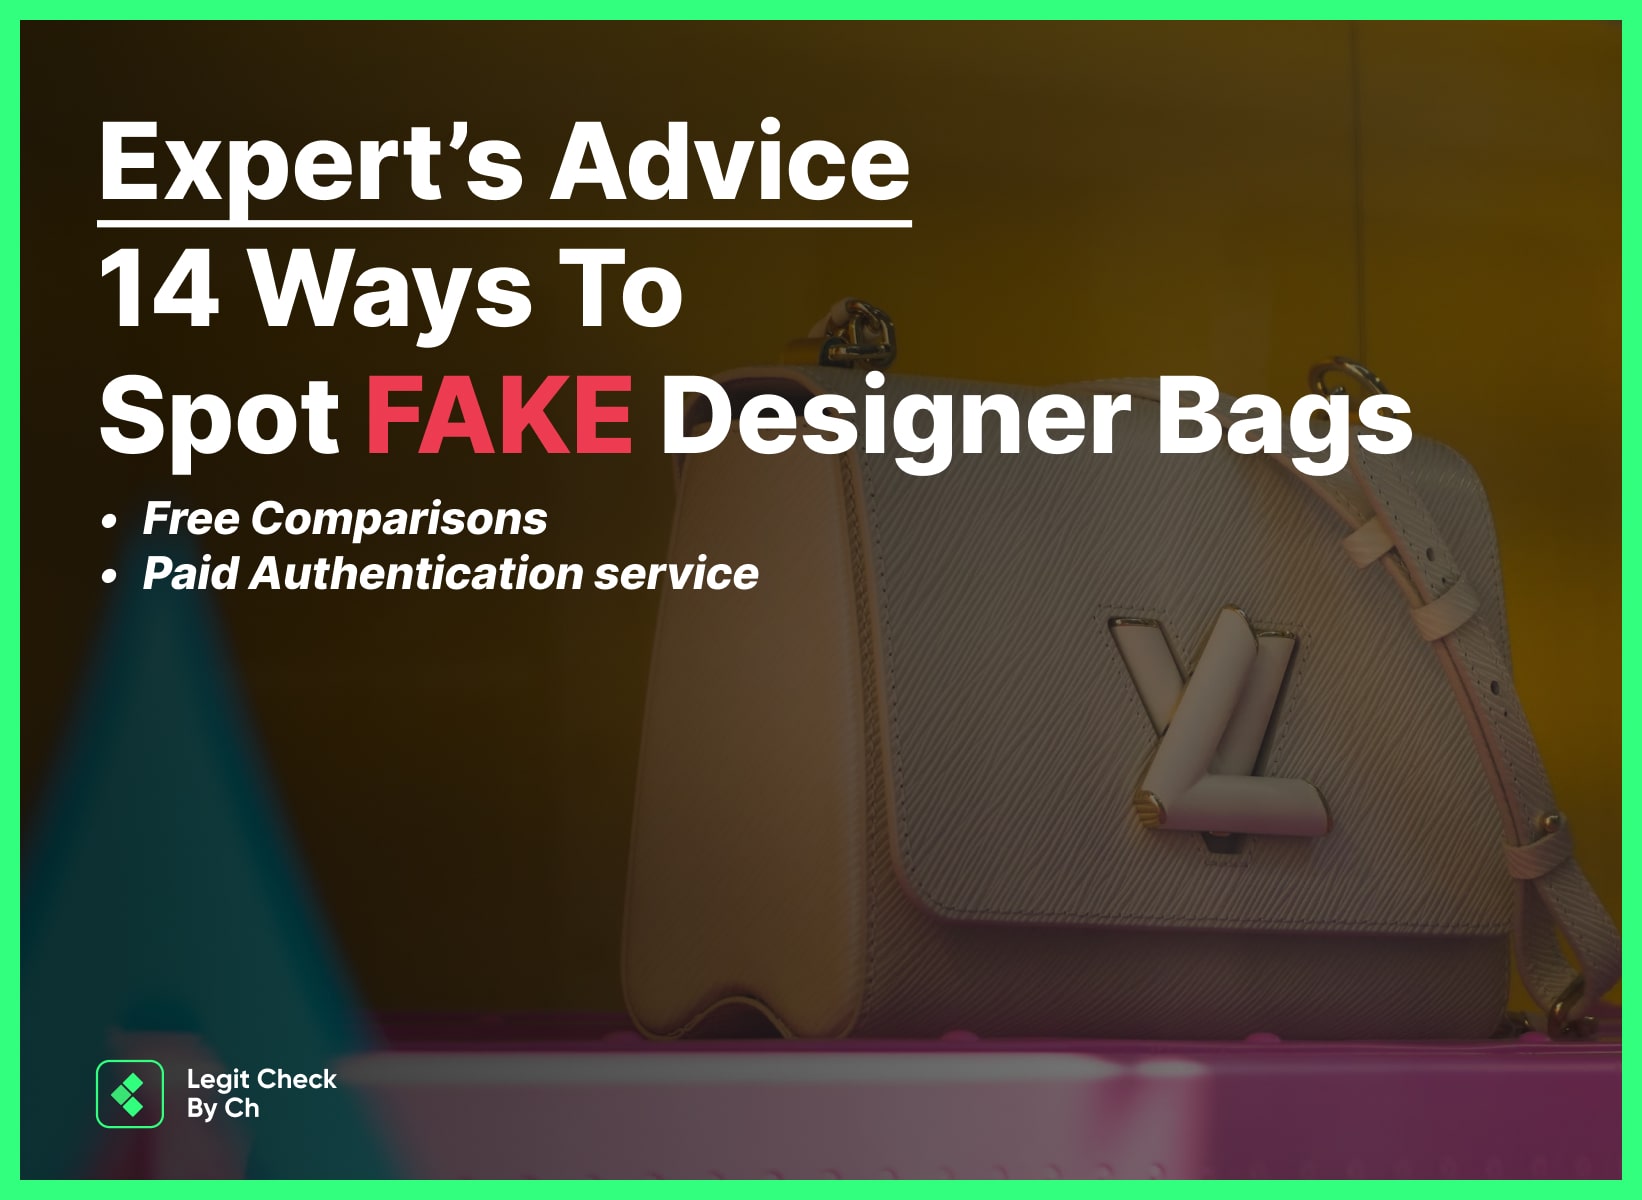 Expert advice - How to spot fake designer bags